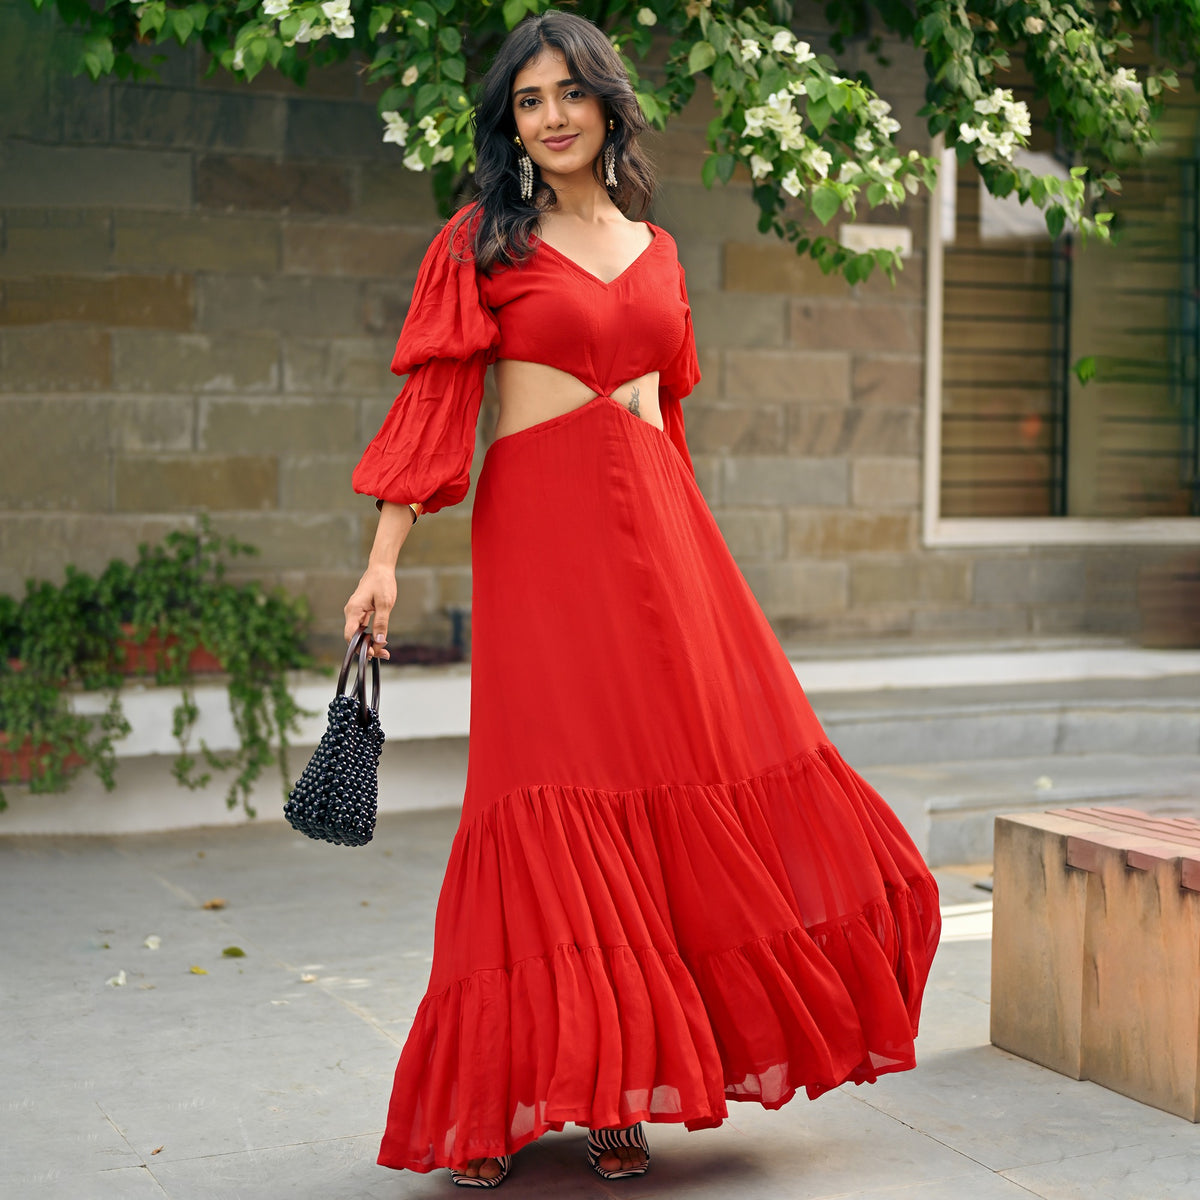 Kristina Red long Dress